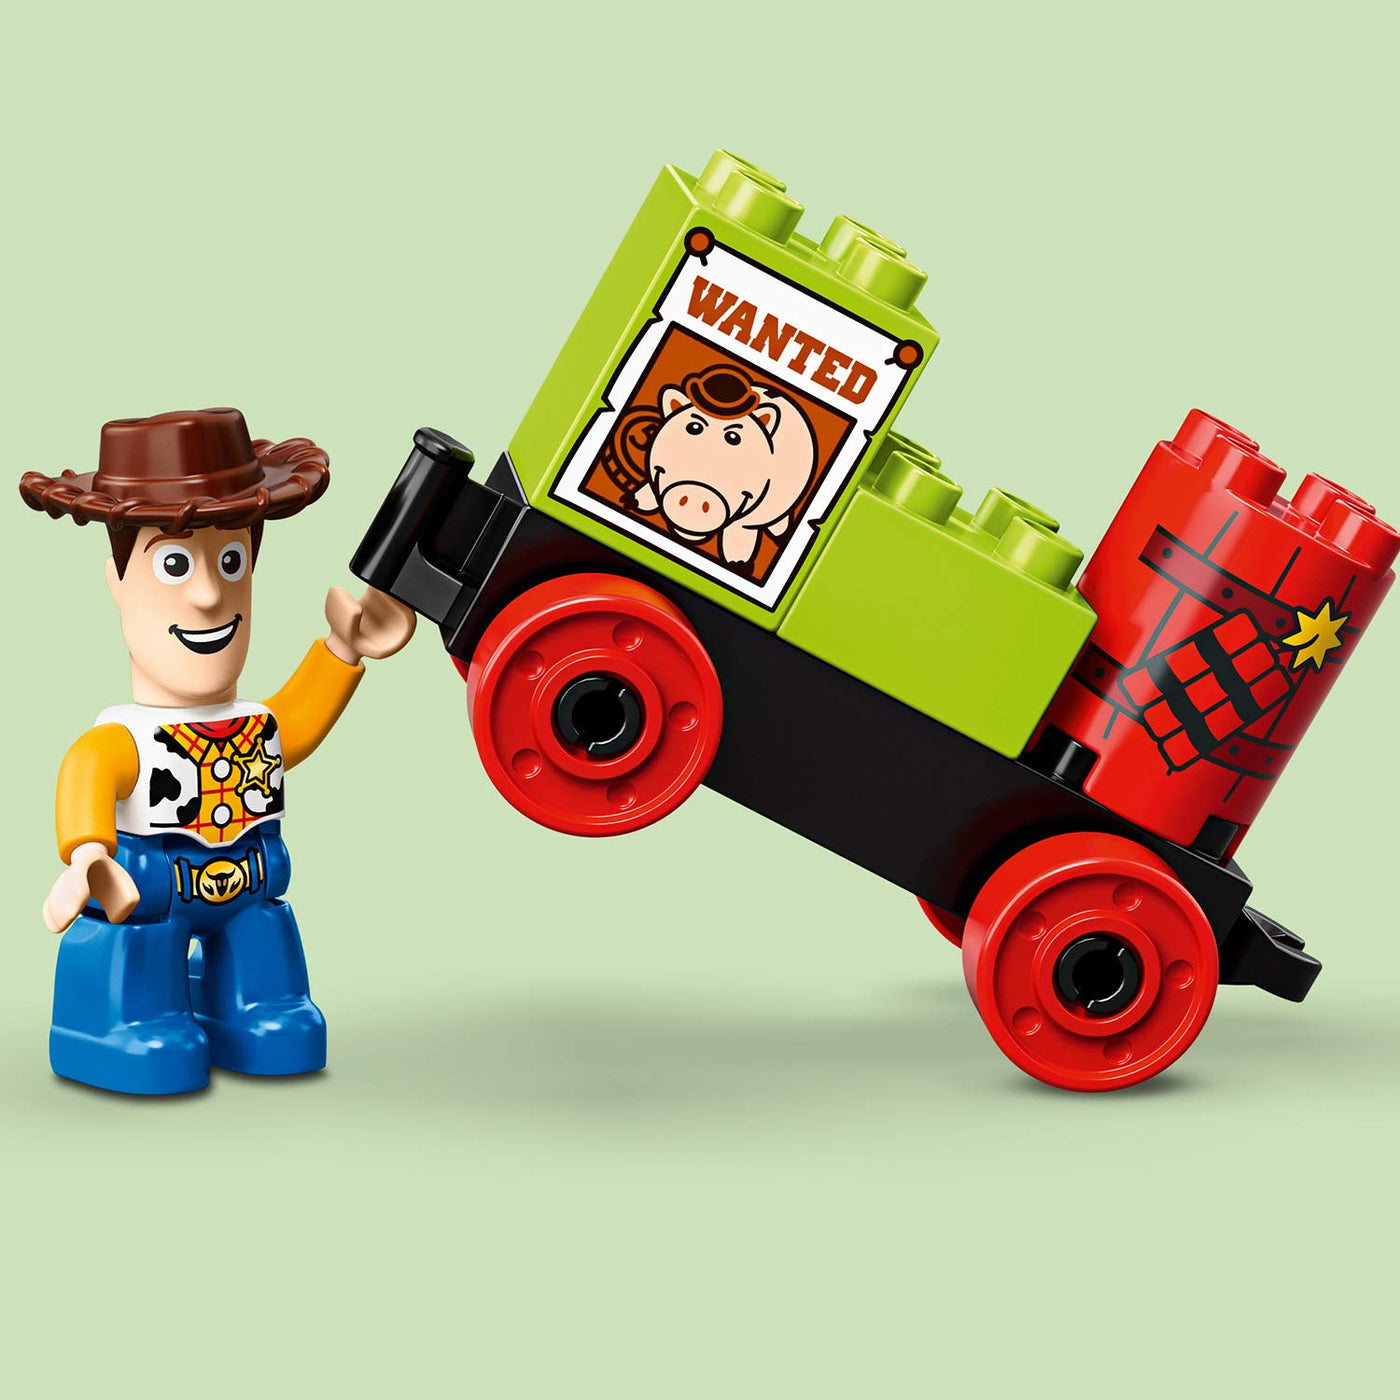 Lego DUPLO Toy Story Train, 10894